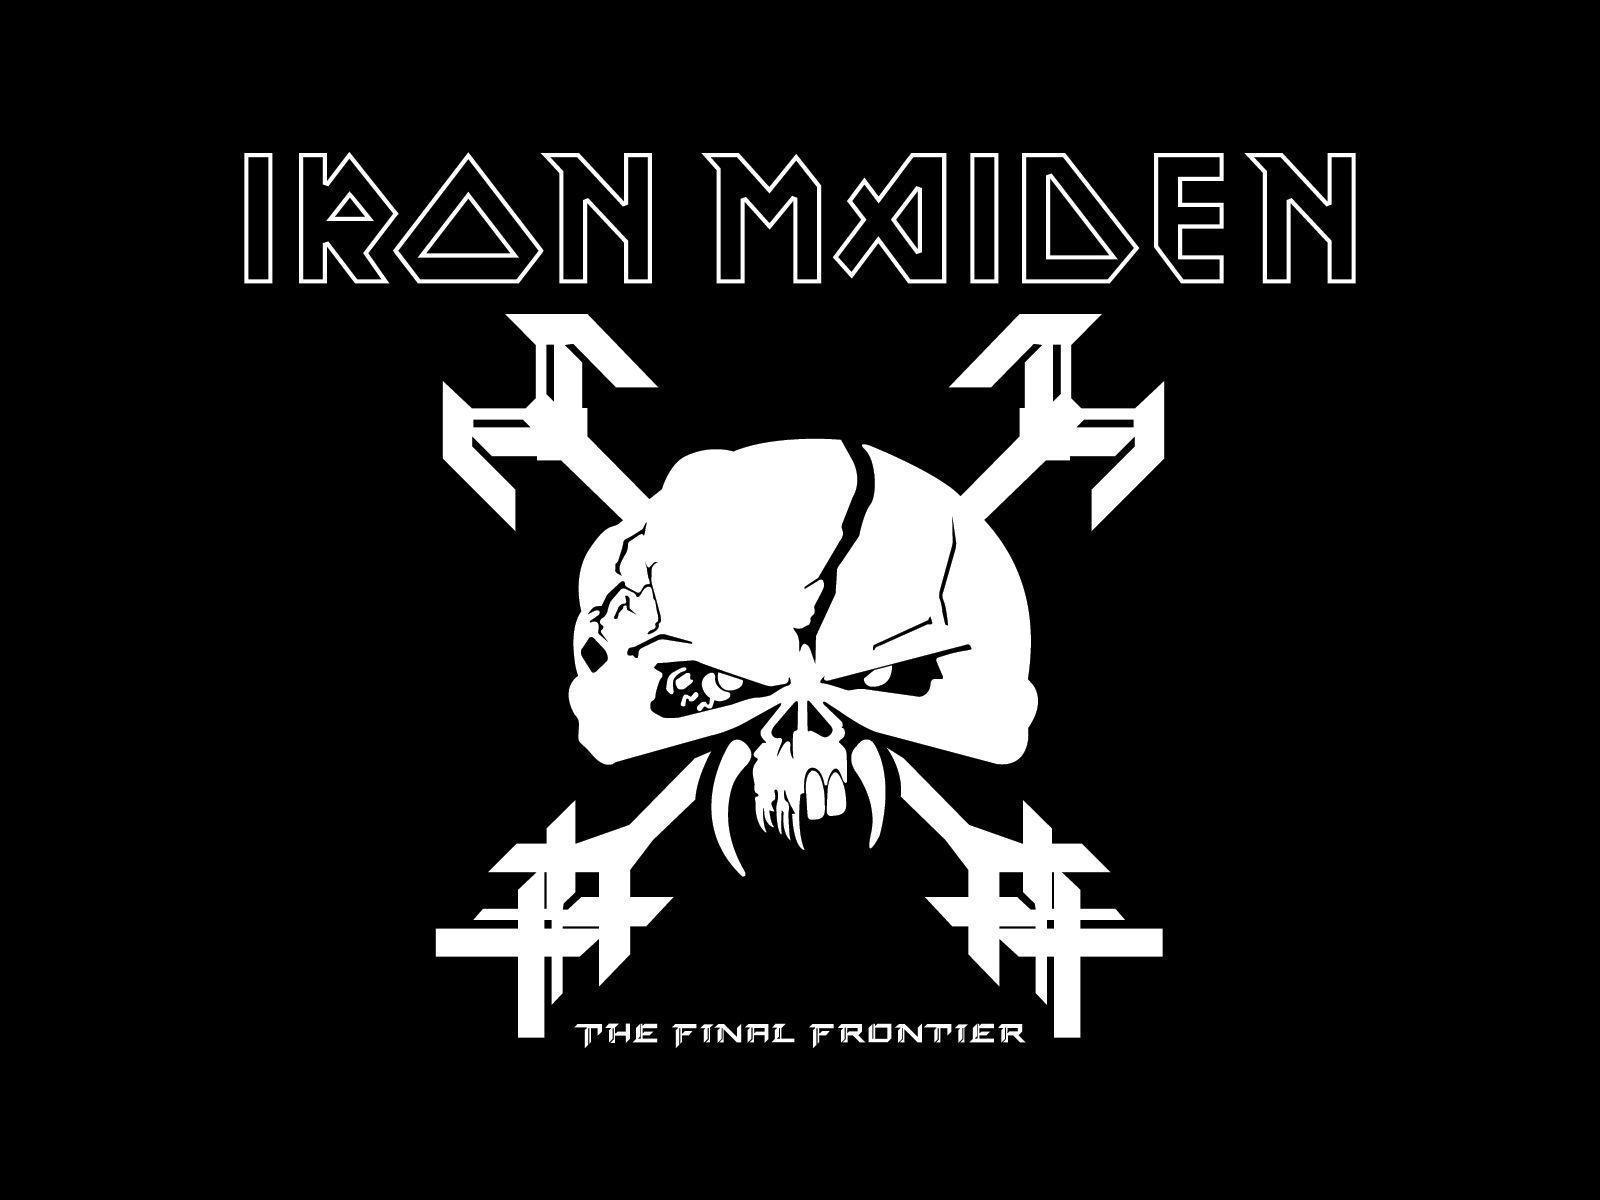 Iron Maiden band logo wallpaper. Band logos band logos